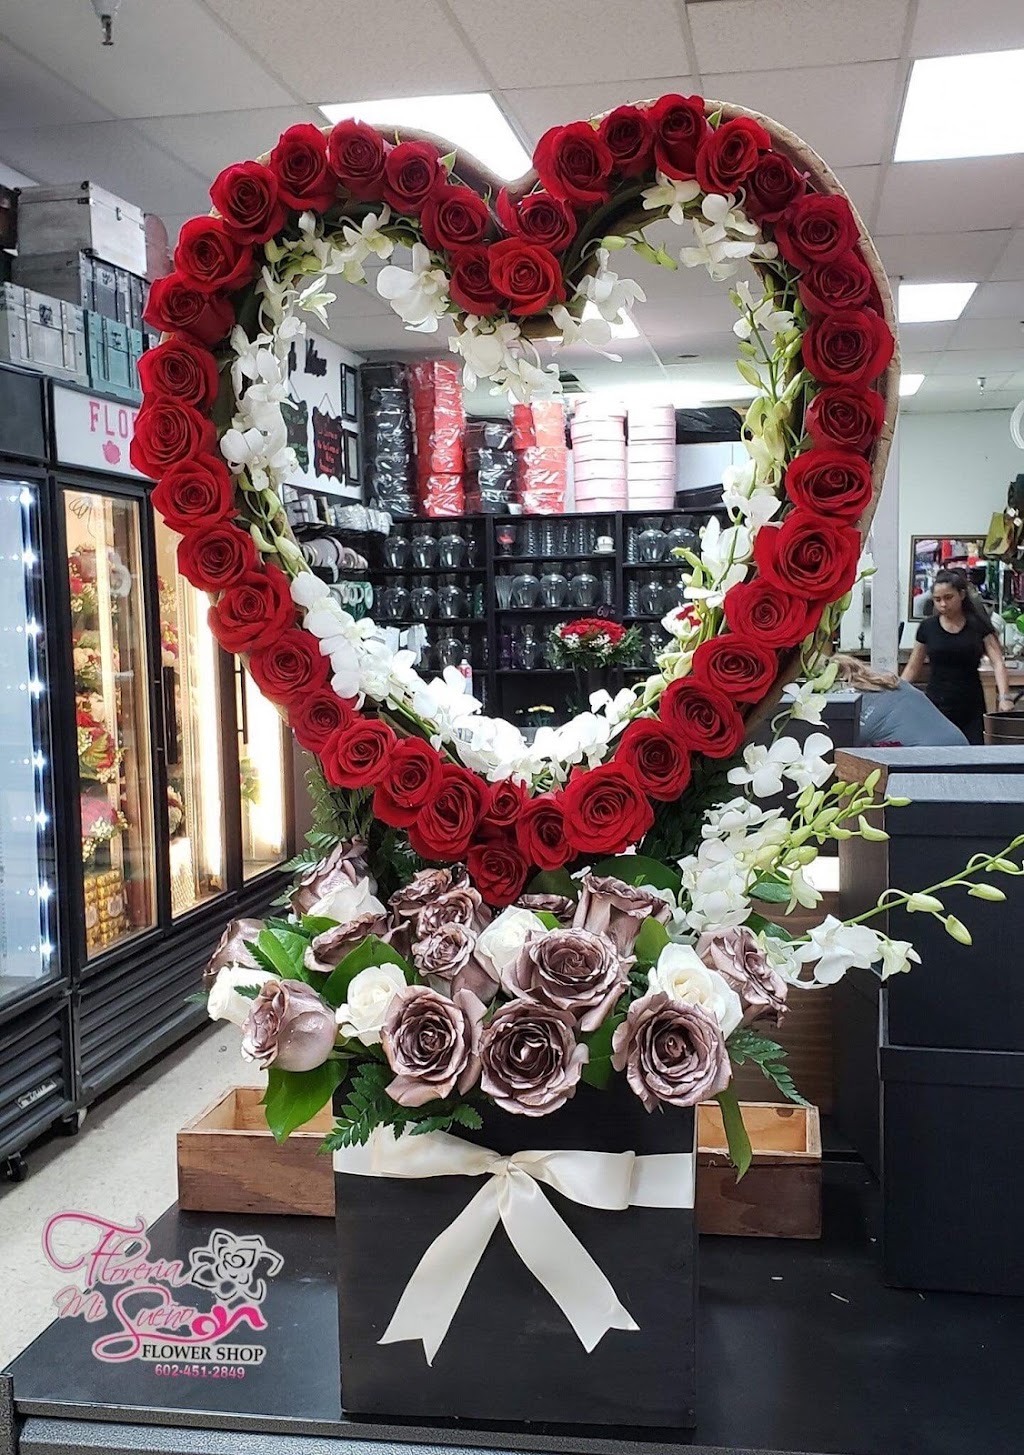 Floreria mi Sueño Flower Shop | 2929 N 75th Ave #23, Phoenix, AZ 85033 | Phone: (602) 451-2849